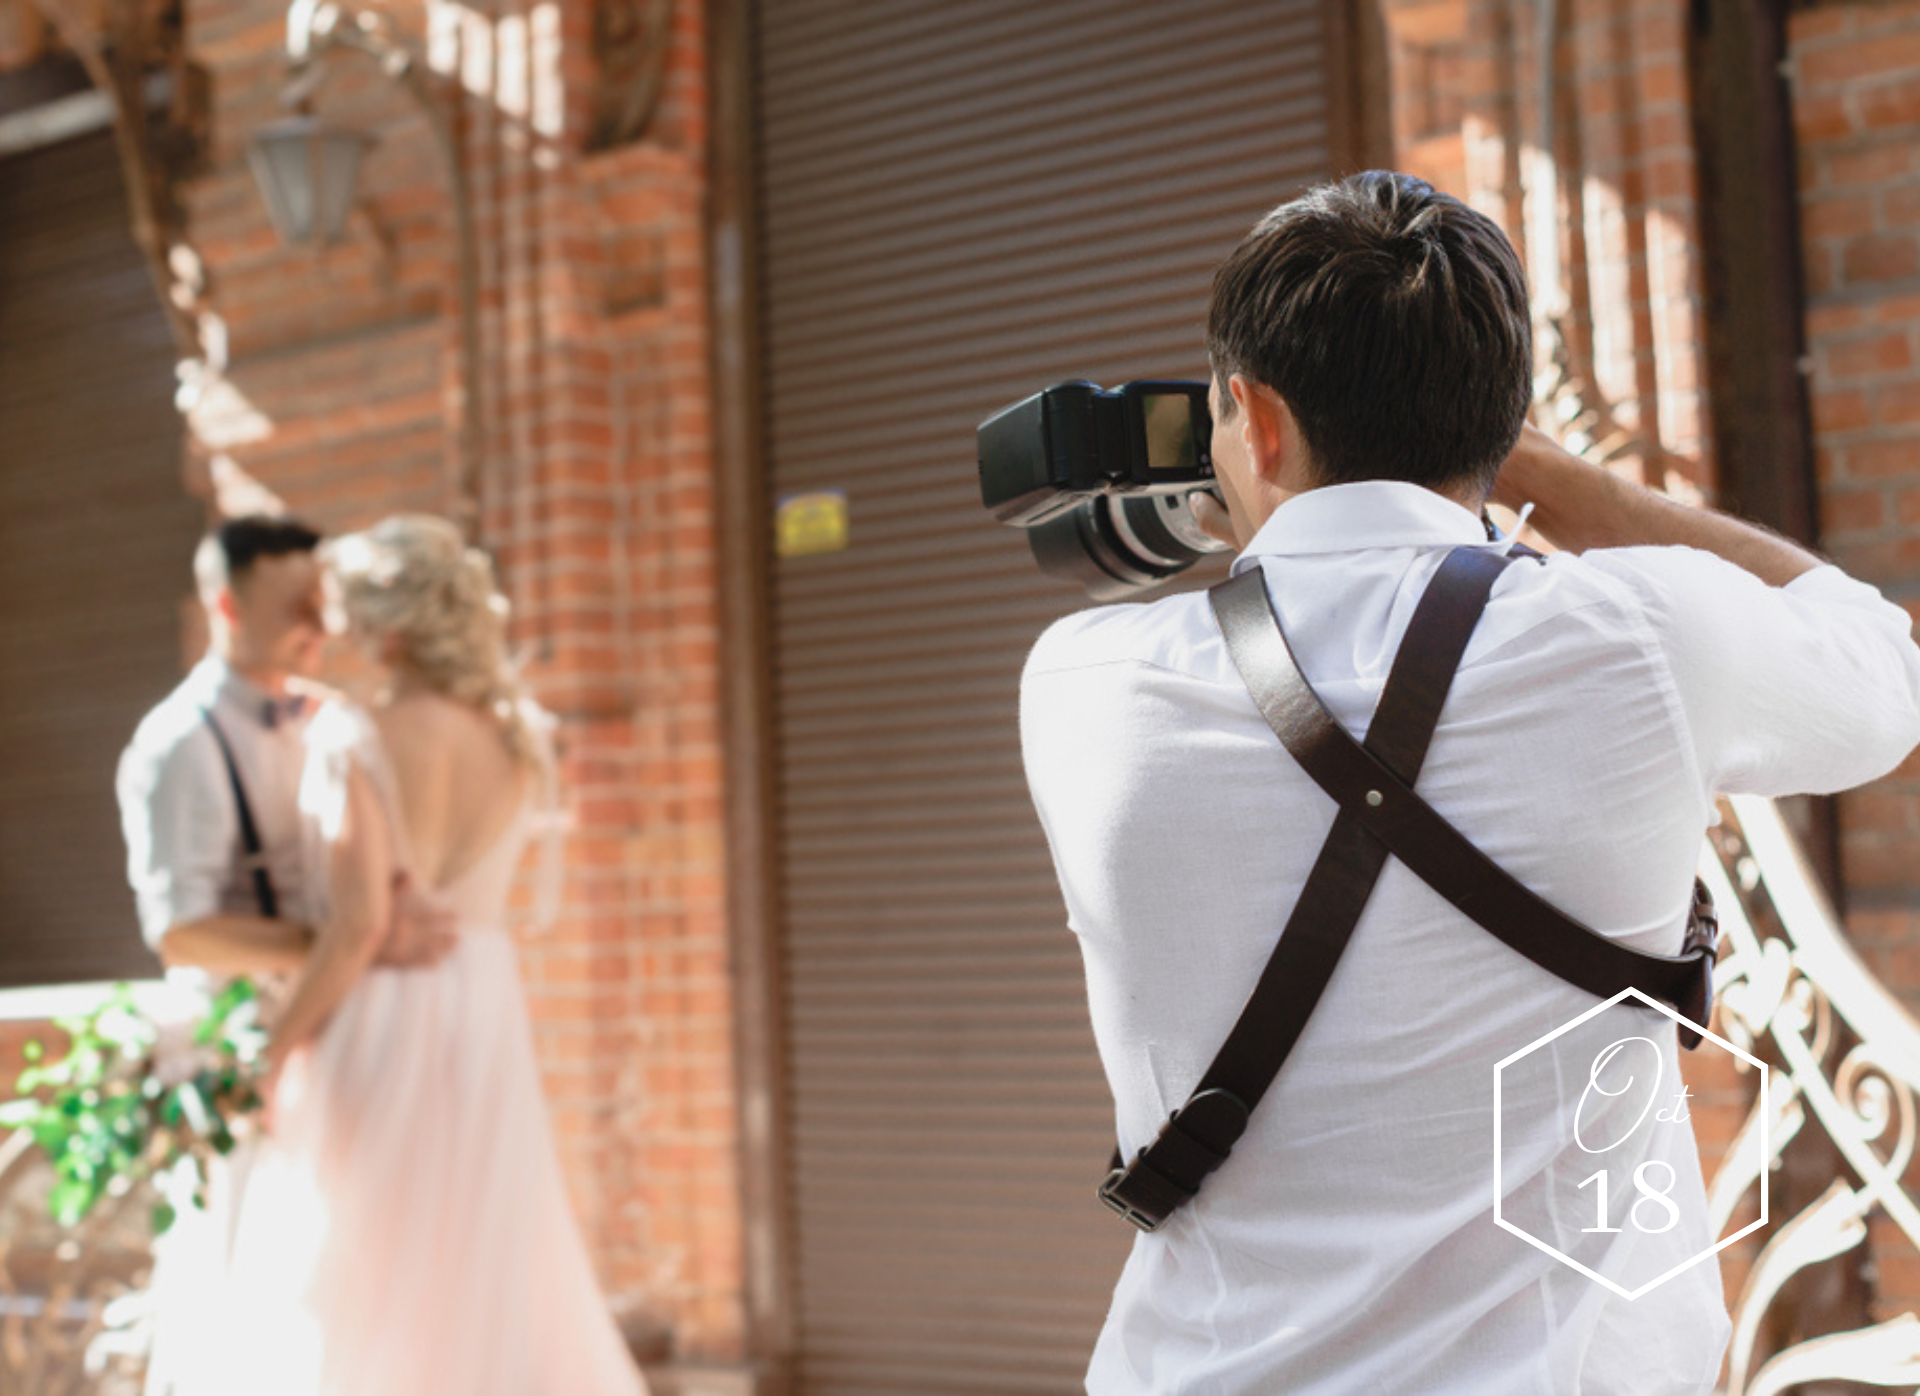 Behind the scenes wedding photographer capturing bridal portrait